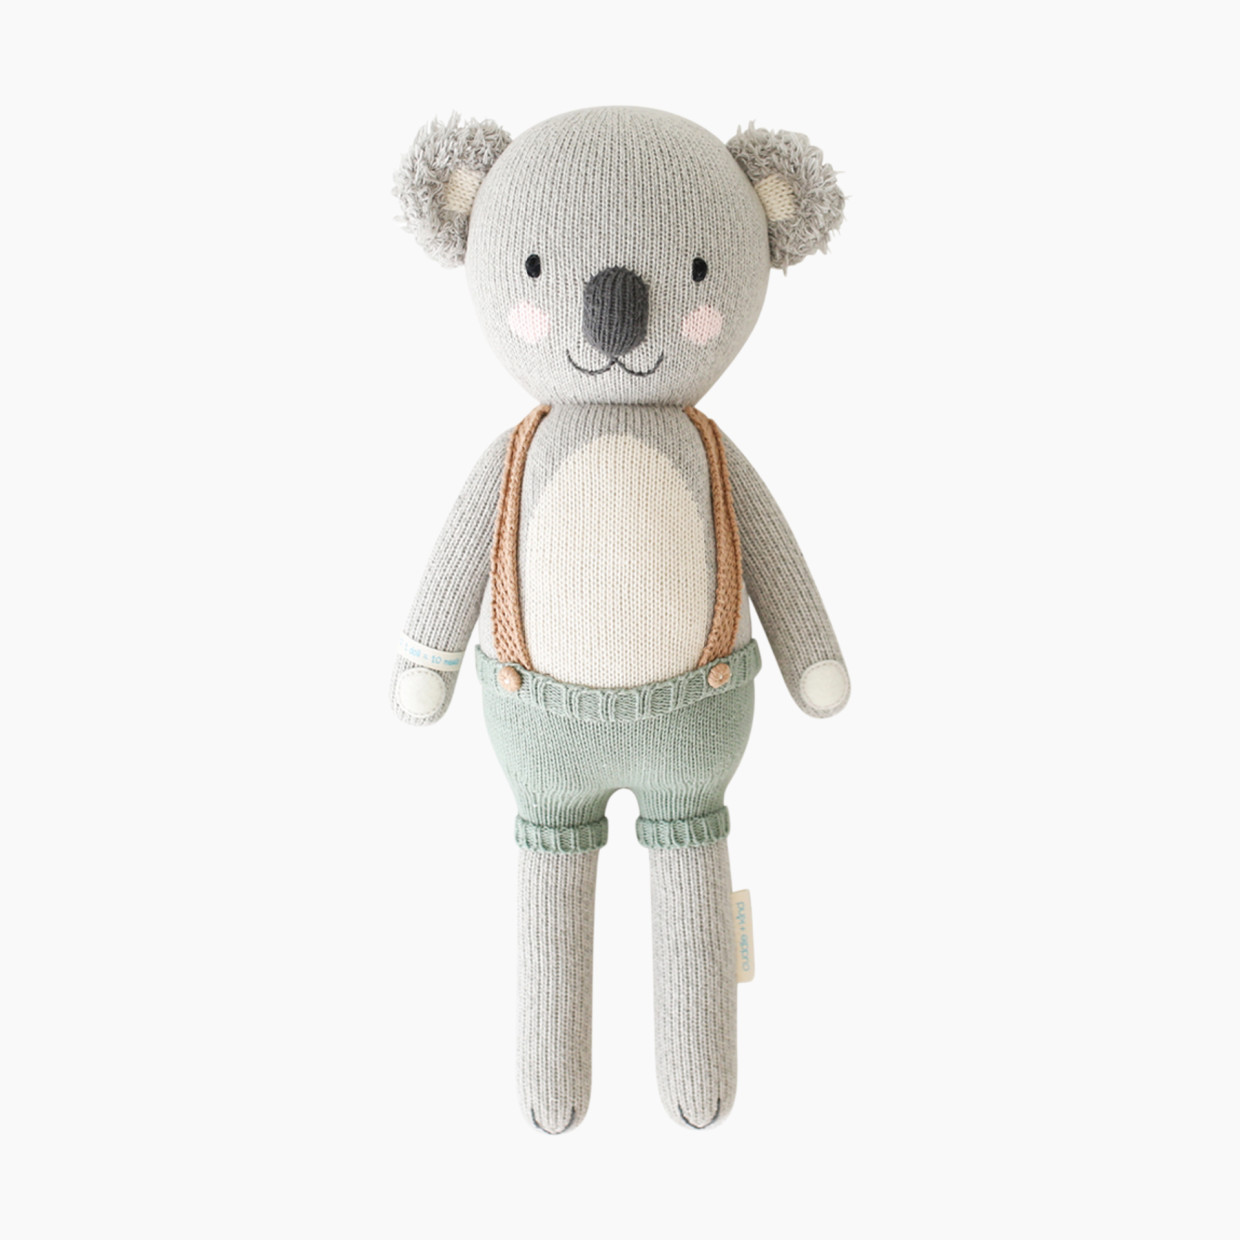 cuddle+kind Hand-Knit Doll - Quinn The Koala, Little 13".